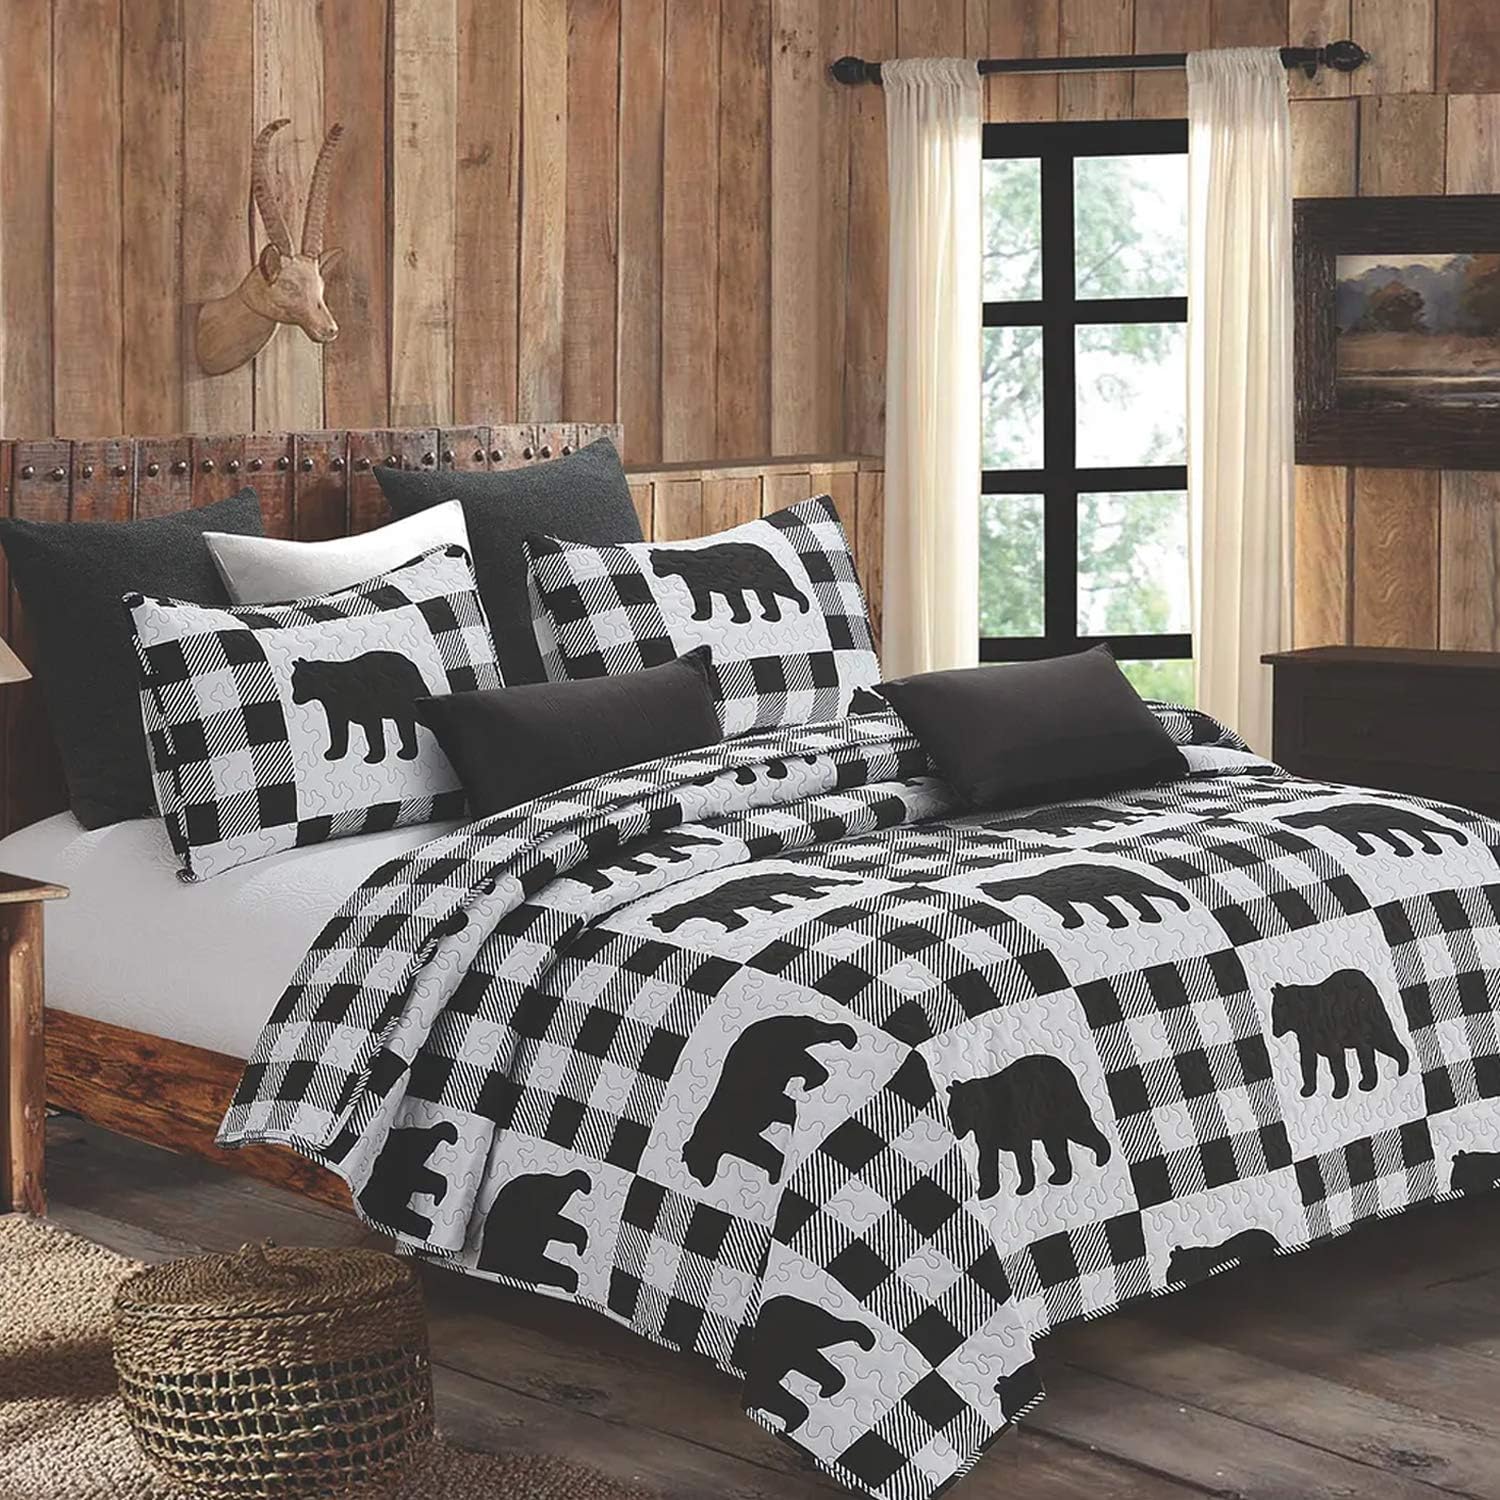 Virah Bella 3 Piece King Lodge Quilt Bedding Set - Buffalo Bear Plaid Black - Rustic Cabin Country Reversible Camping Comforter Set with Decorative Pillow Shams, Black/White